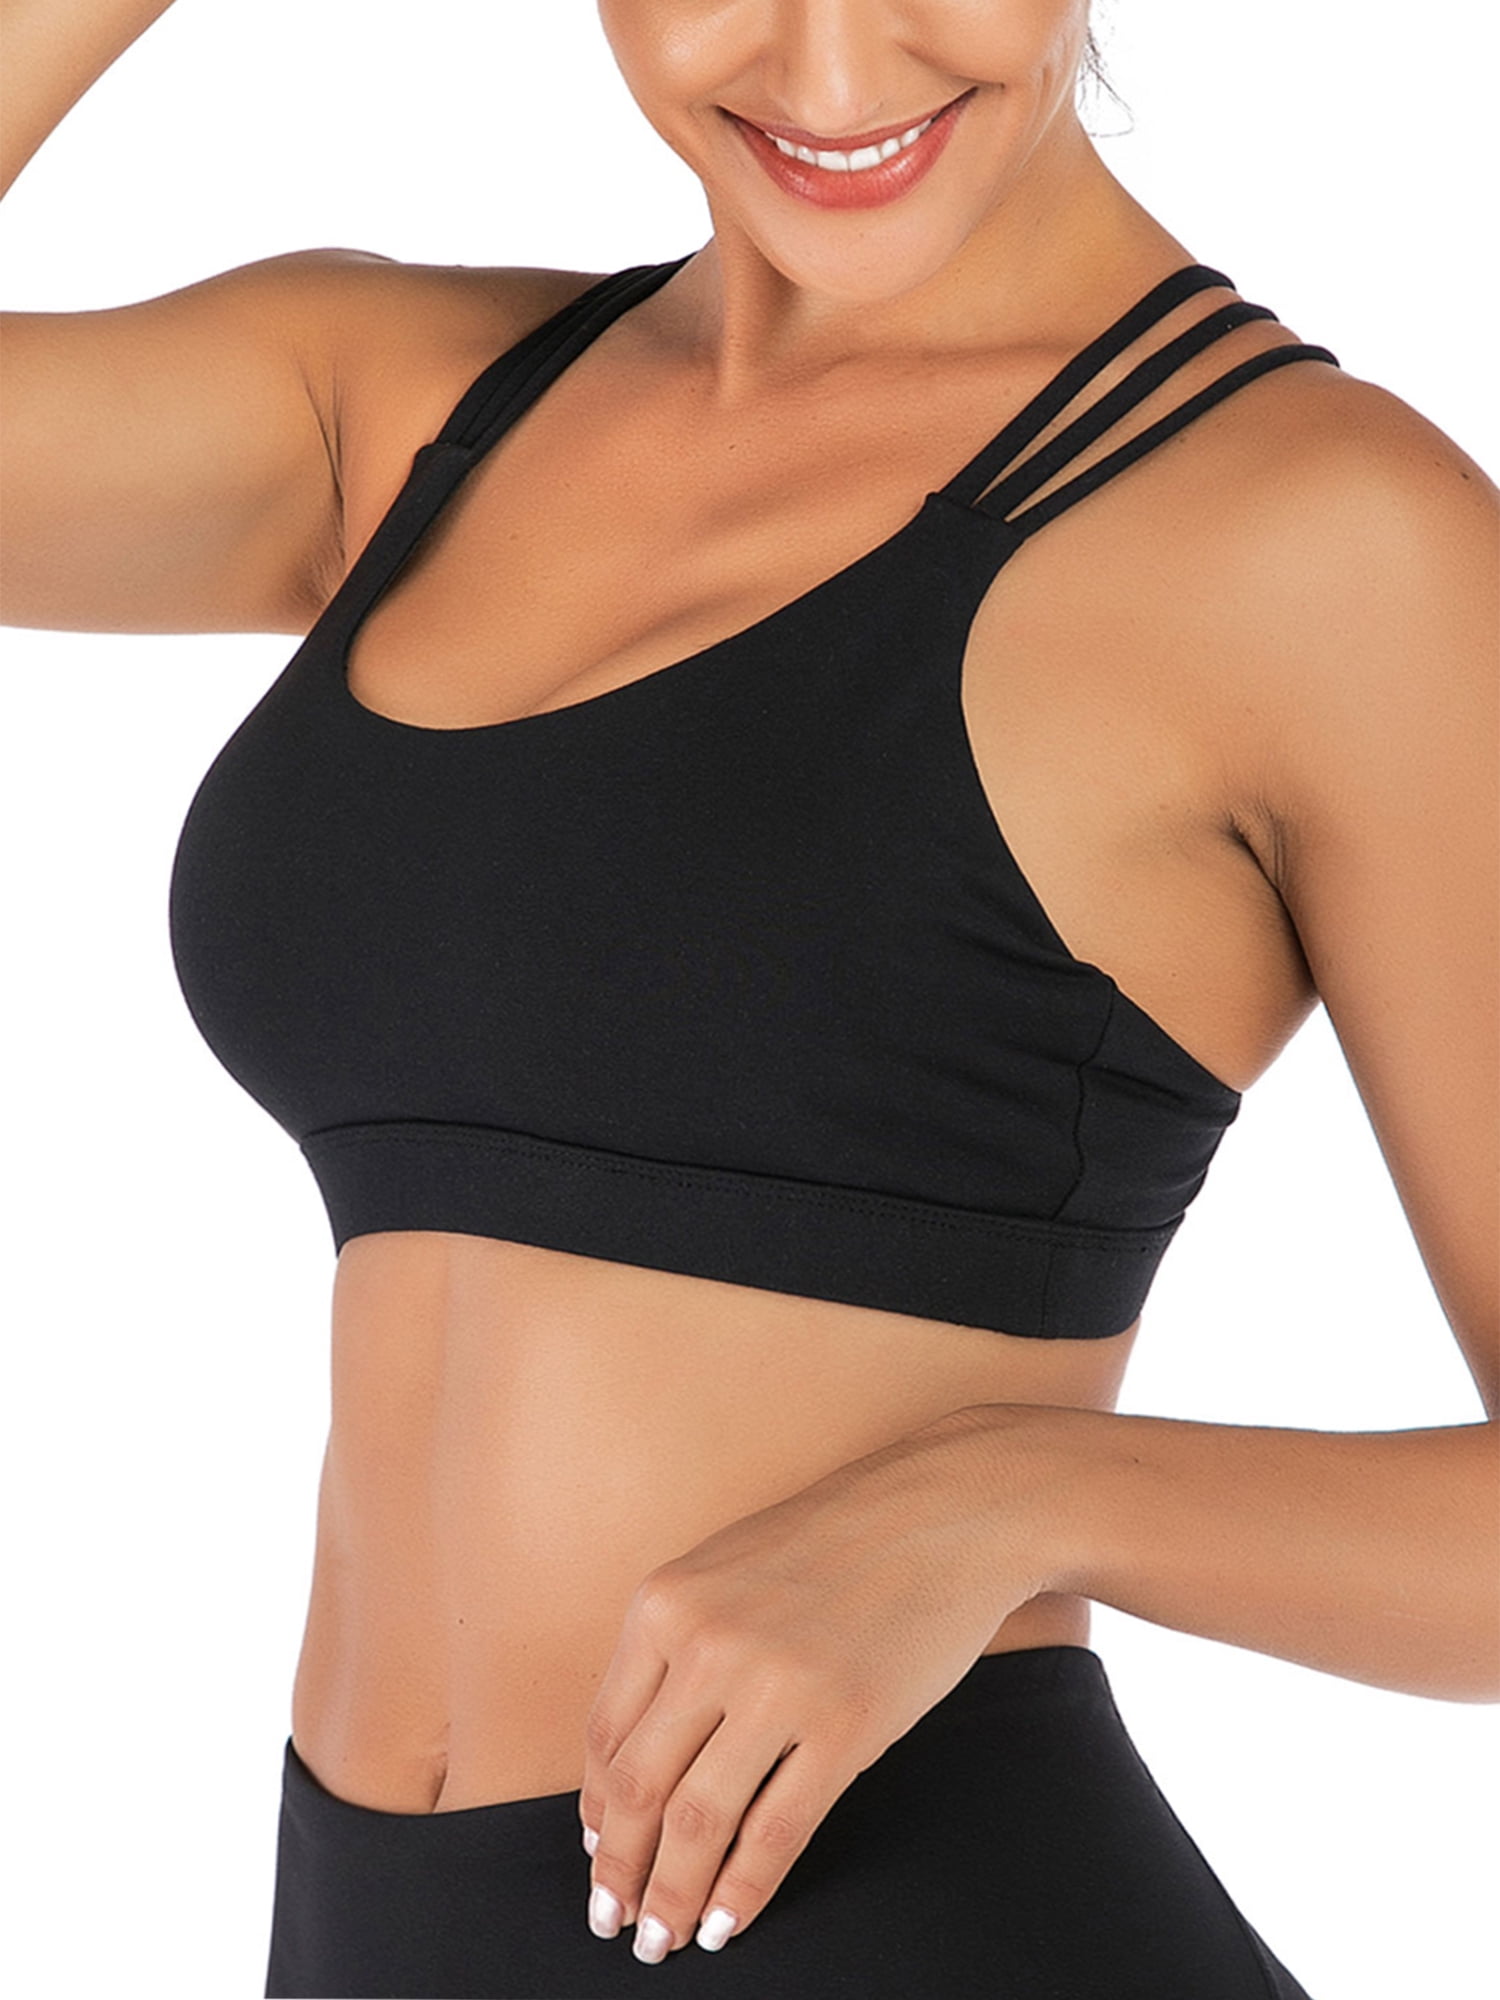 Yoga Sports Bra Fitness Workout Tank Tops Padded Strappy Women Vest Tops H 